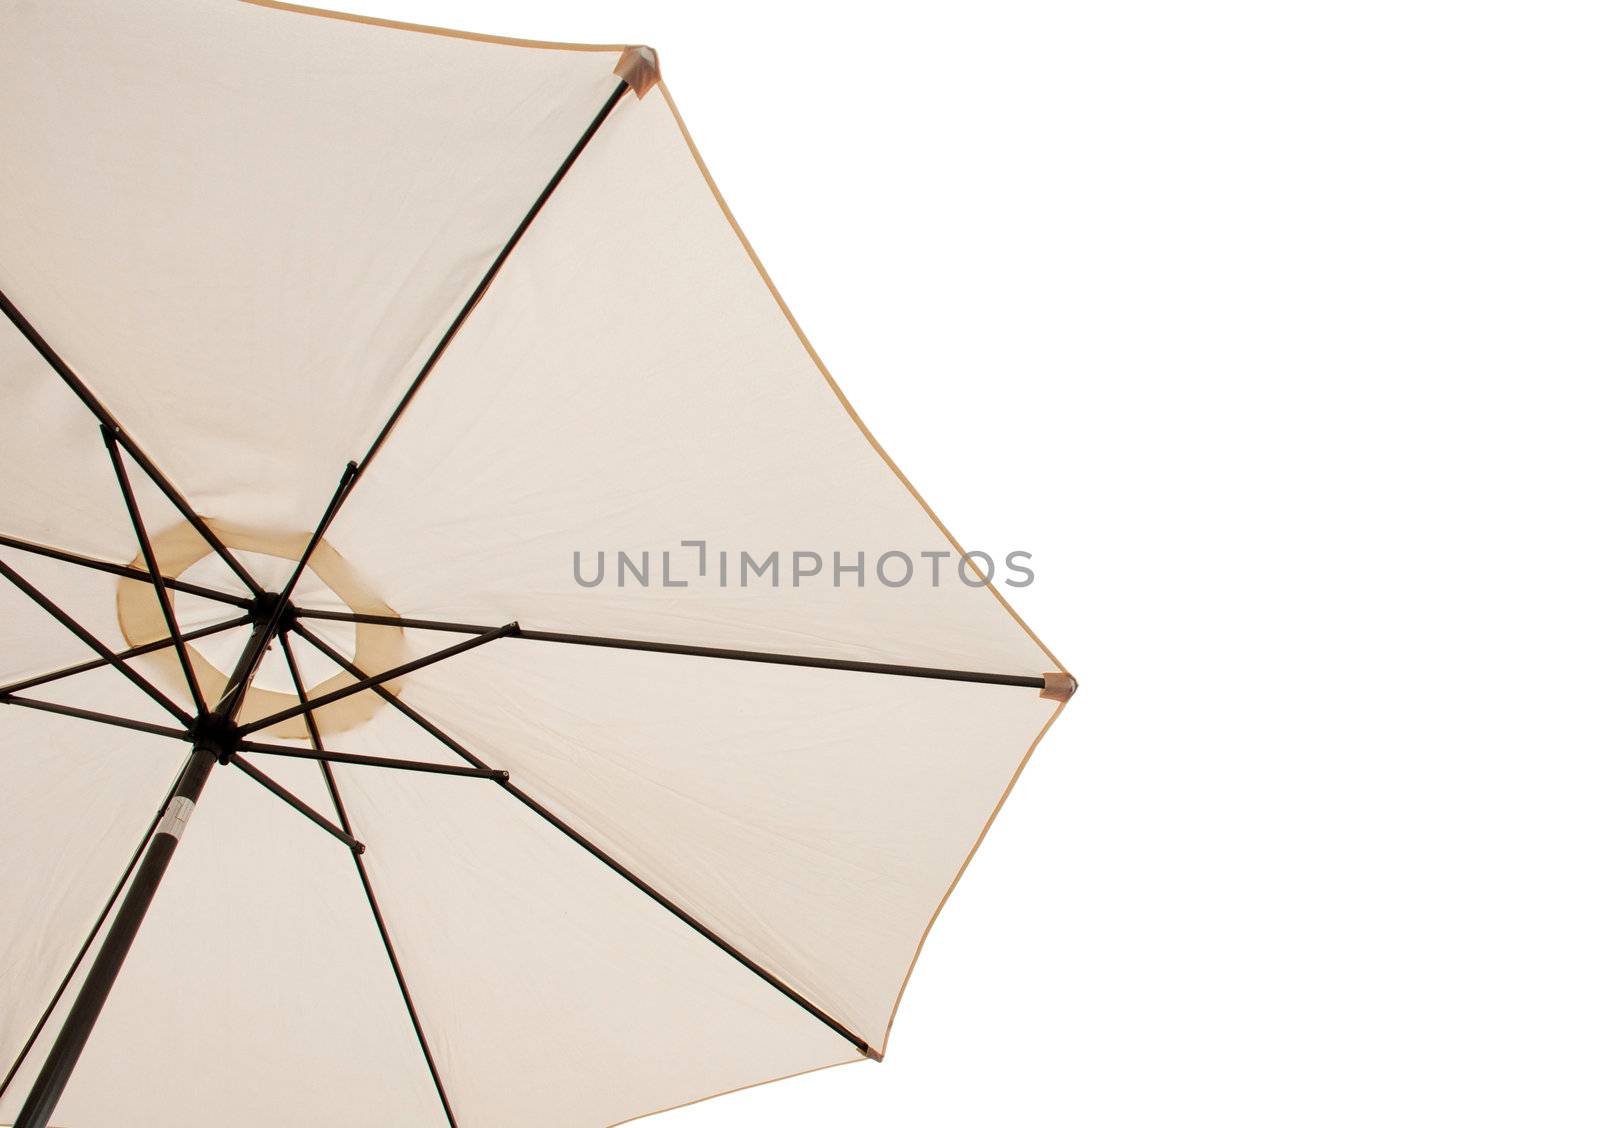 gorgeous beach or pool outdoor umbrella isolated on white background